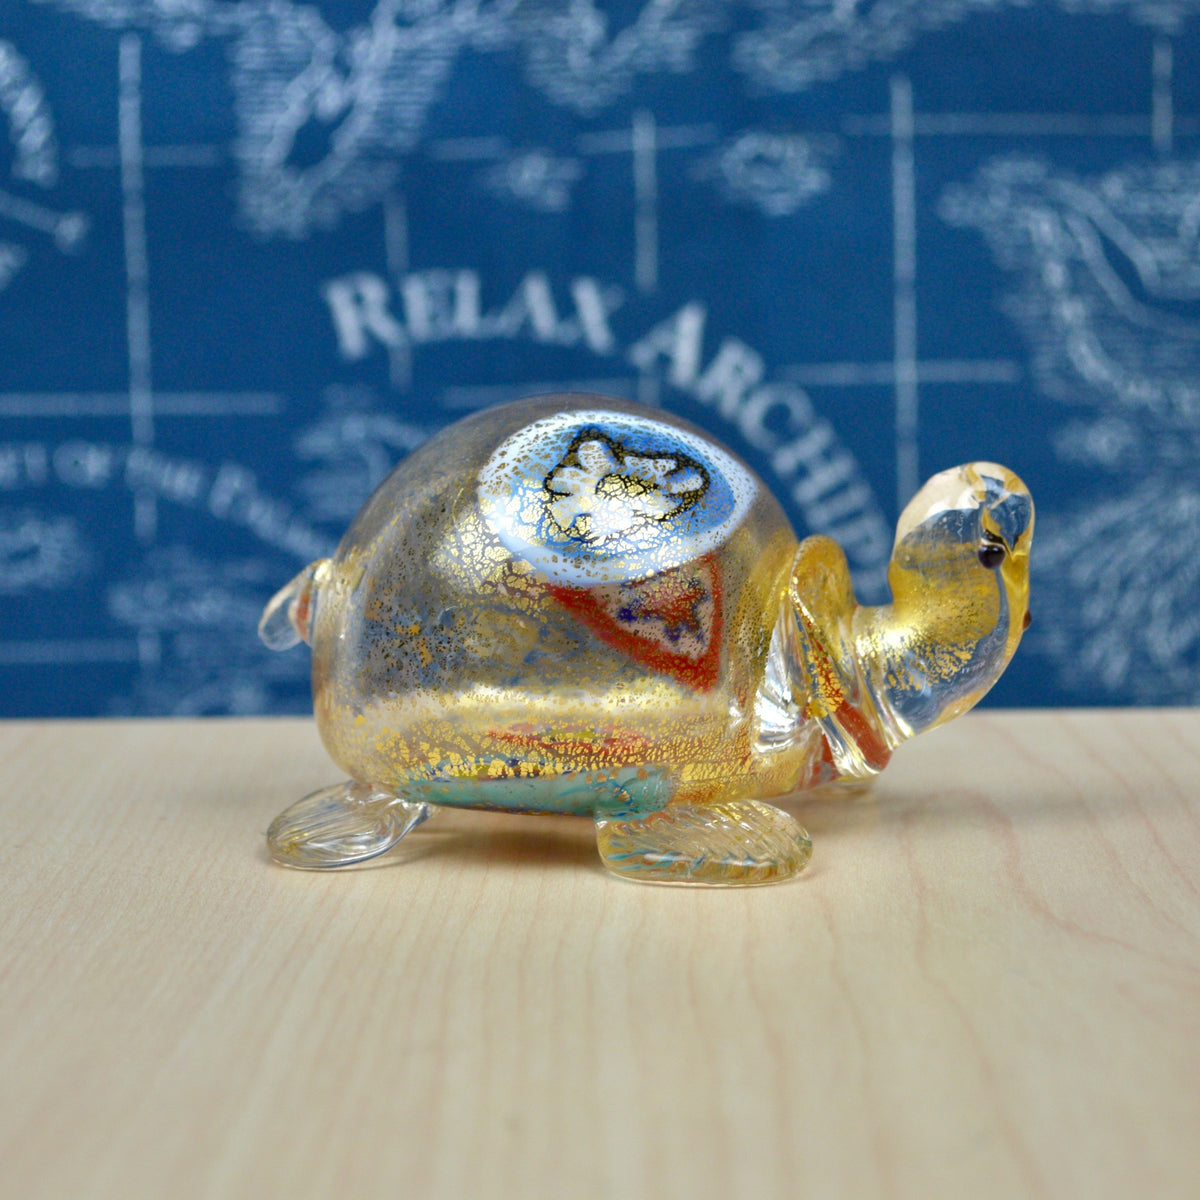 Murano Glass Turtle, Decorative Figurine, Made in Italy - My Italian Decor